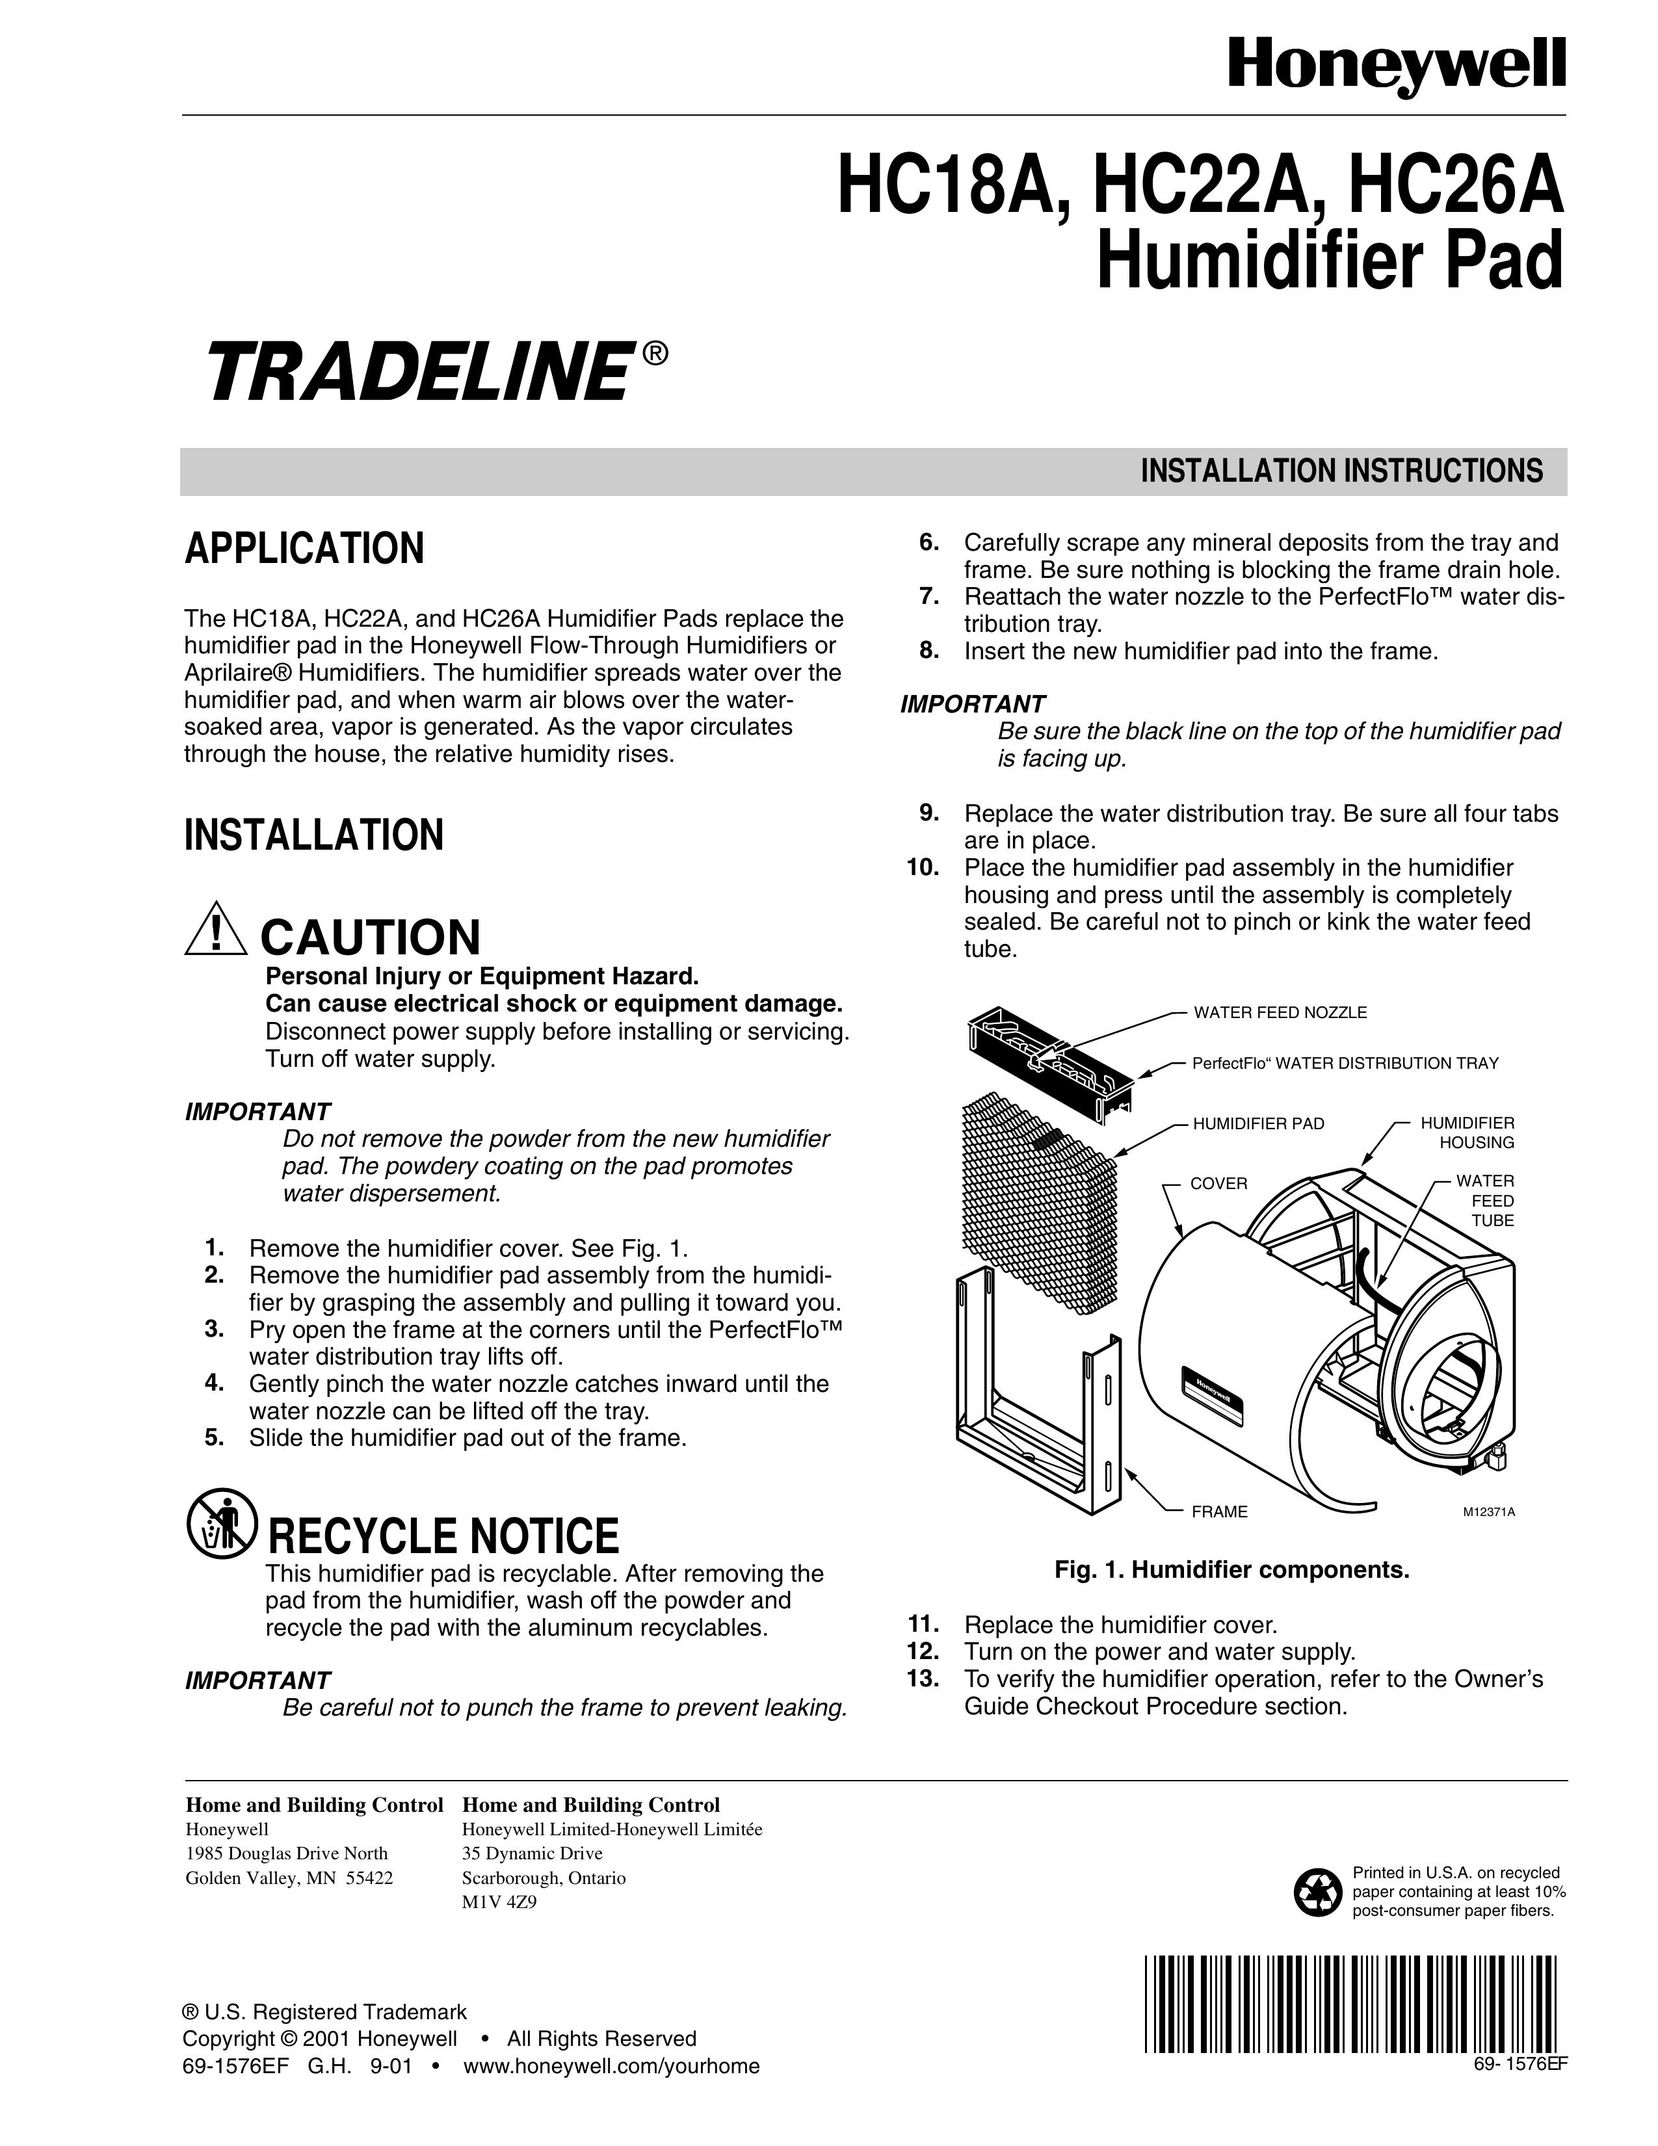 Honeywell HC26A Humidifier User Manual